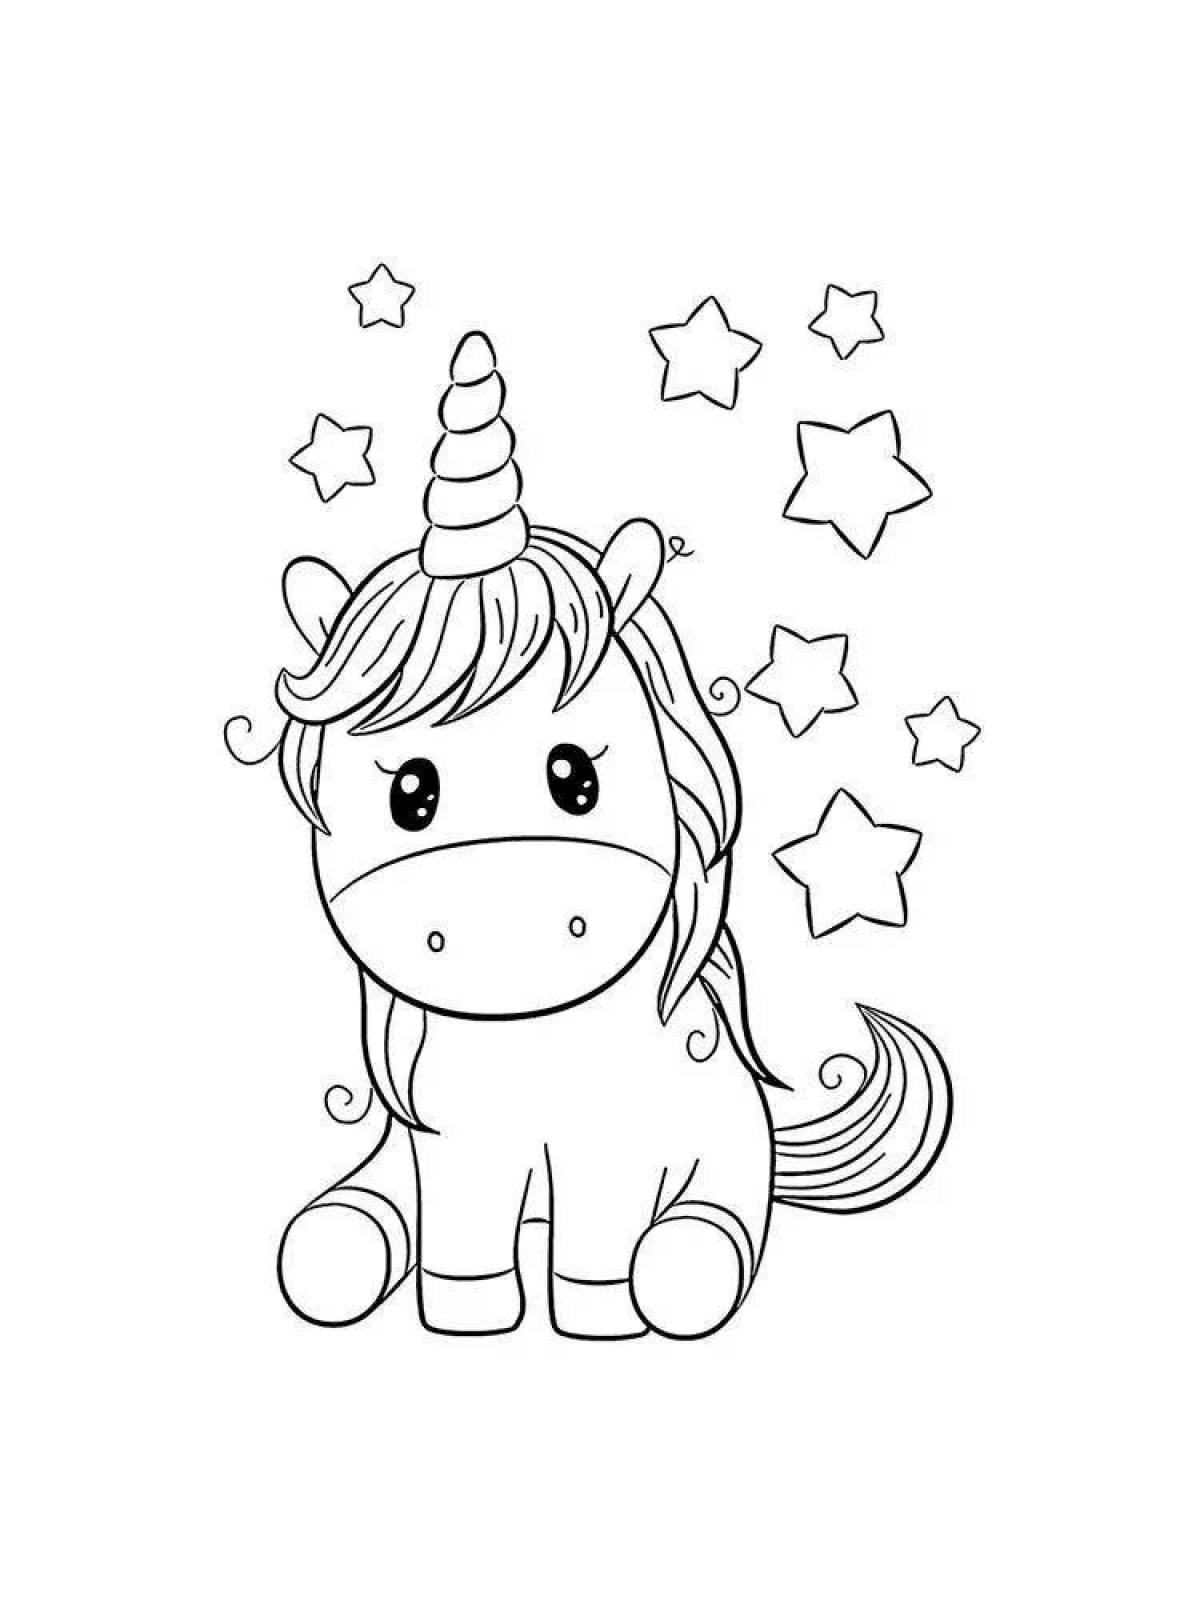 Joyous adopt mi unicorn coloring page